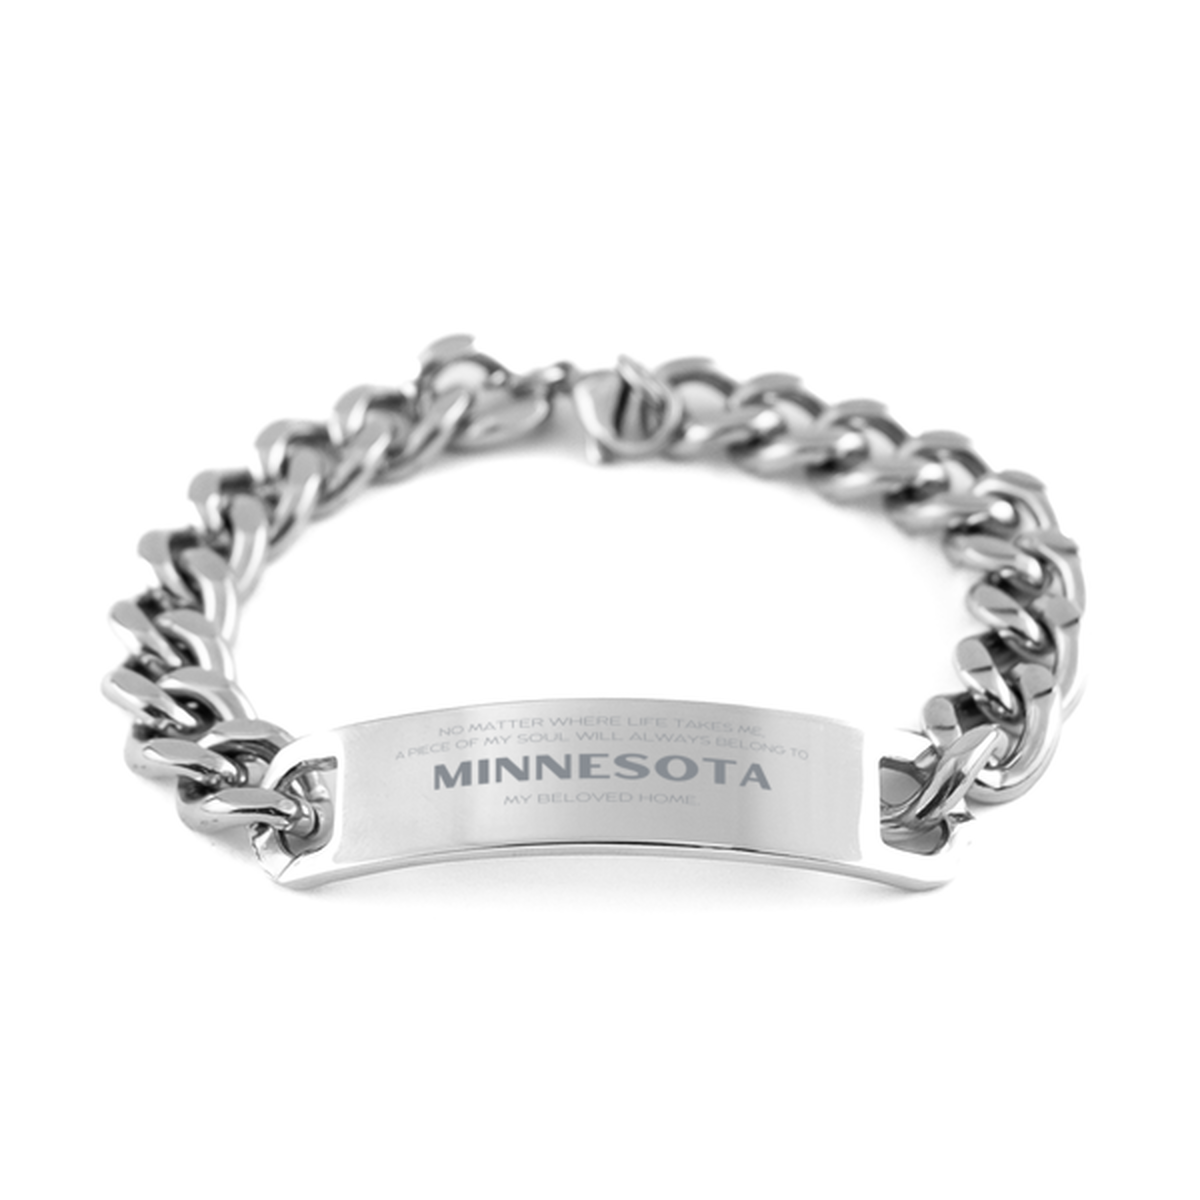 Love Minnesota State Gifts, My soul will always belong to Minnesota, Proud Cuban Chain Stainless Steel Bracelet, Birthday Unique Gifts For Minnesota Men, Women, Friends